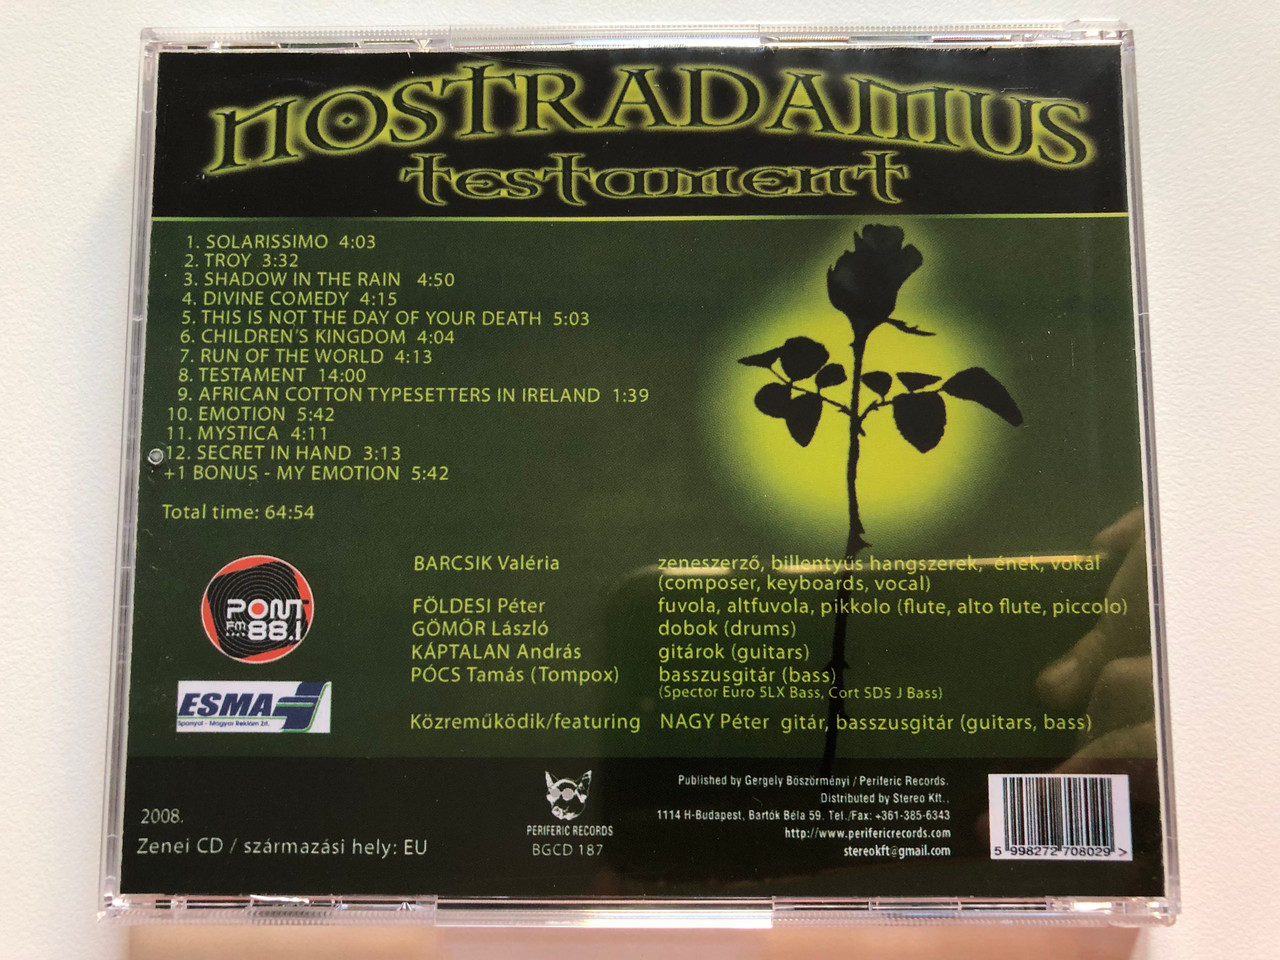 Nostradamus – Testament / Gömör László (drums), Pócs Tamás (bass) from  Solaris / Periferic Records Audio CD 2008 / BGCD 187 - bibleinmylanguage